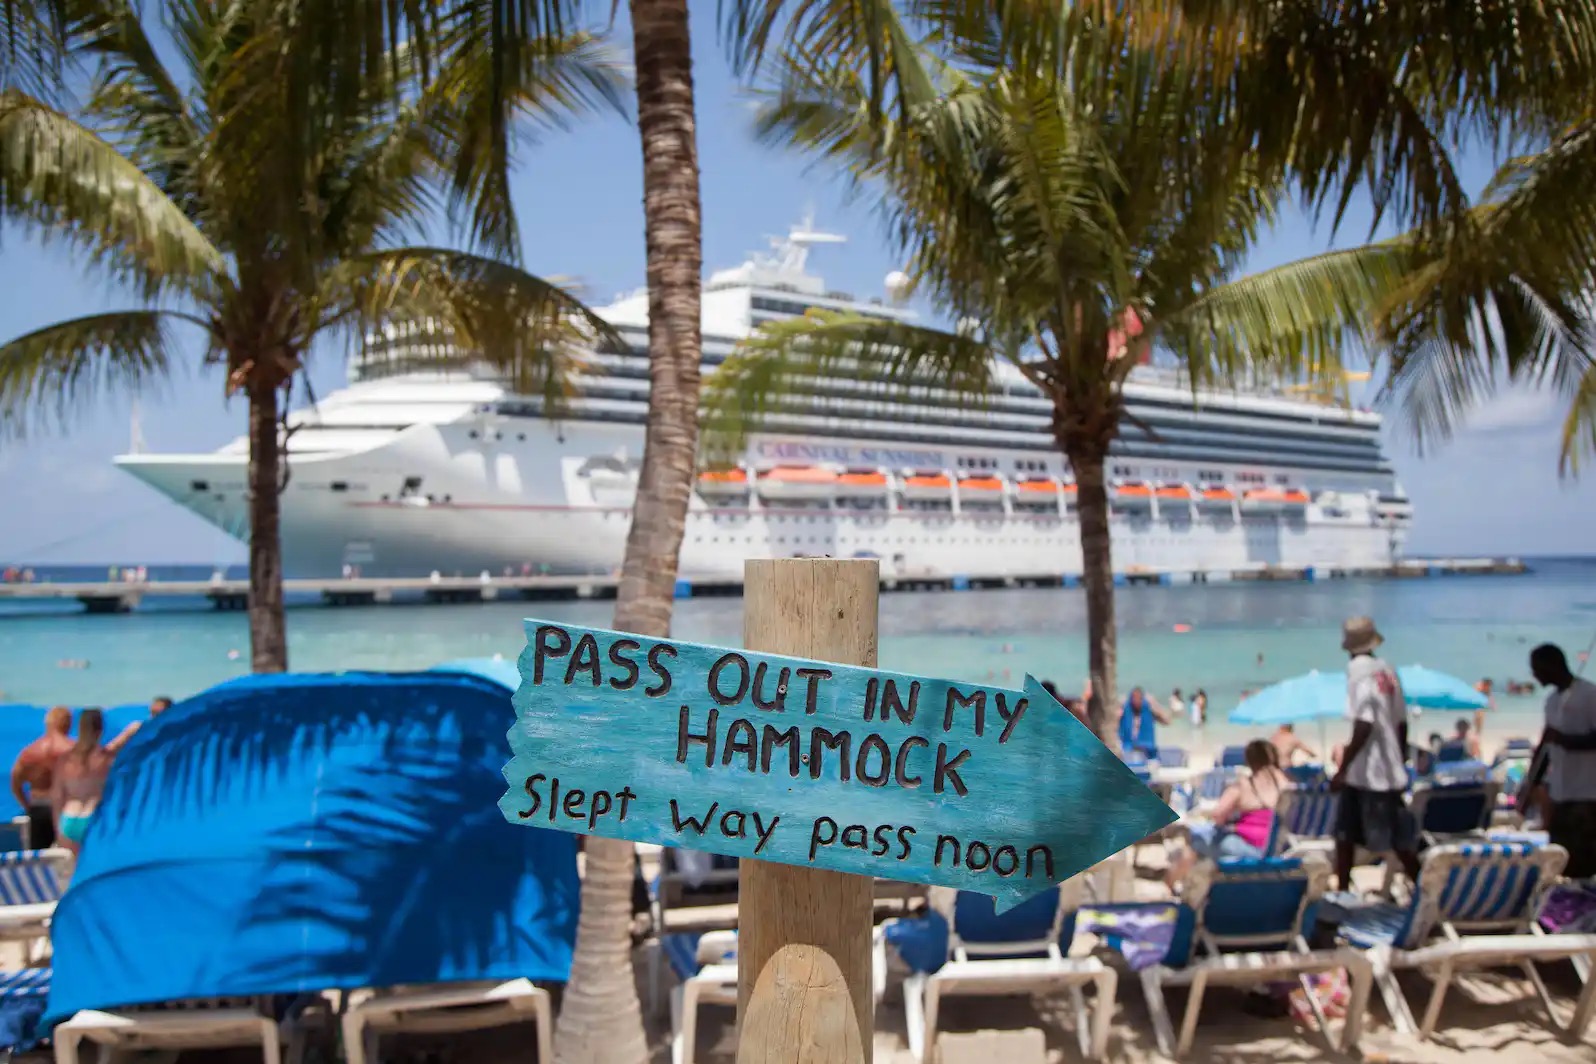 Cruise ship docked in Caribbean. beach and beach chairs